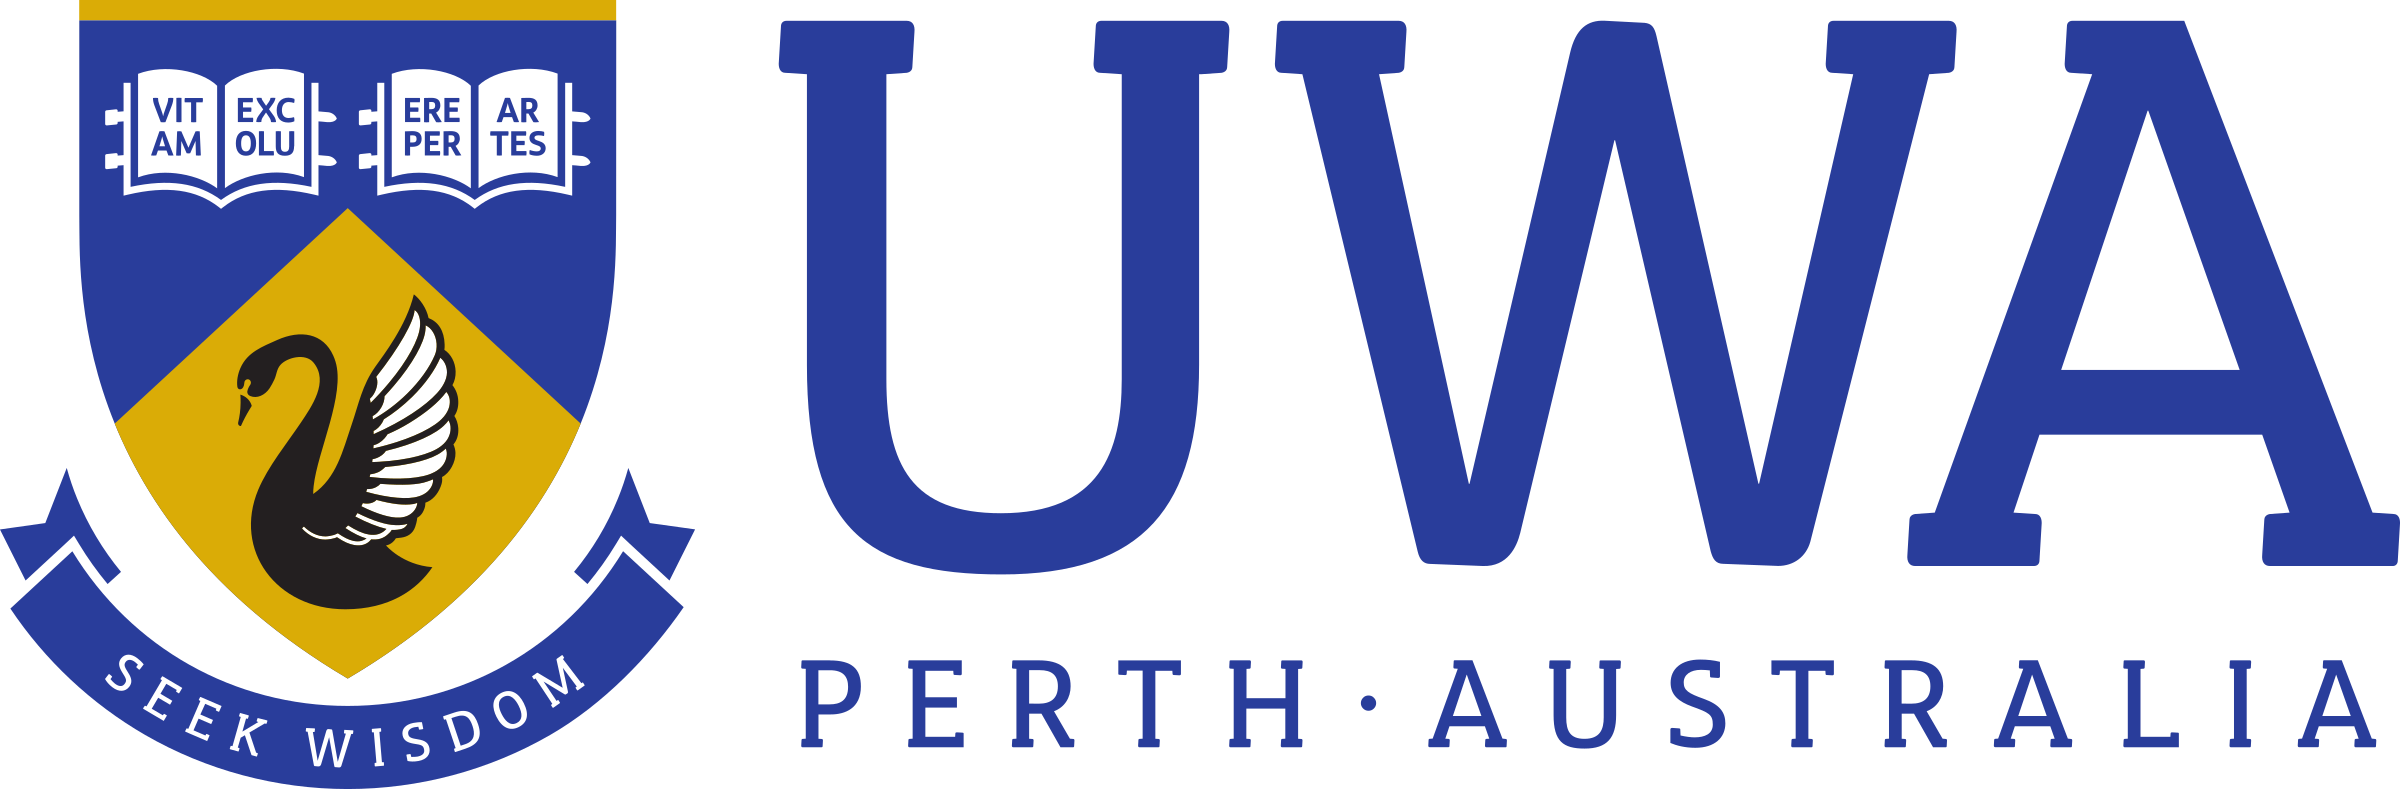 UWA University Perth Logo black and white